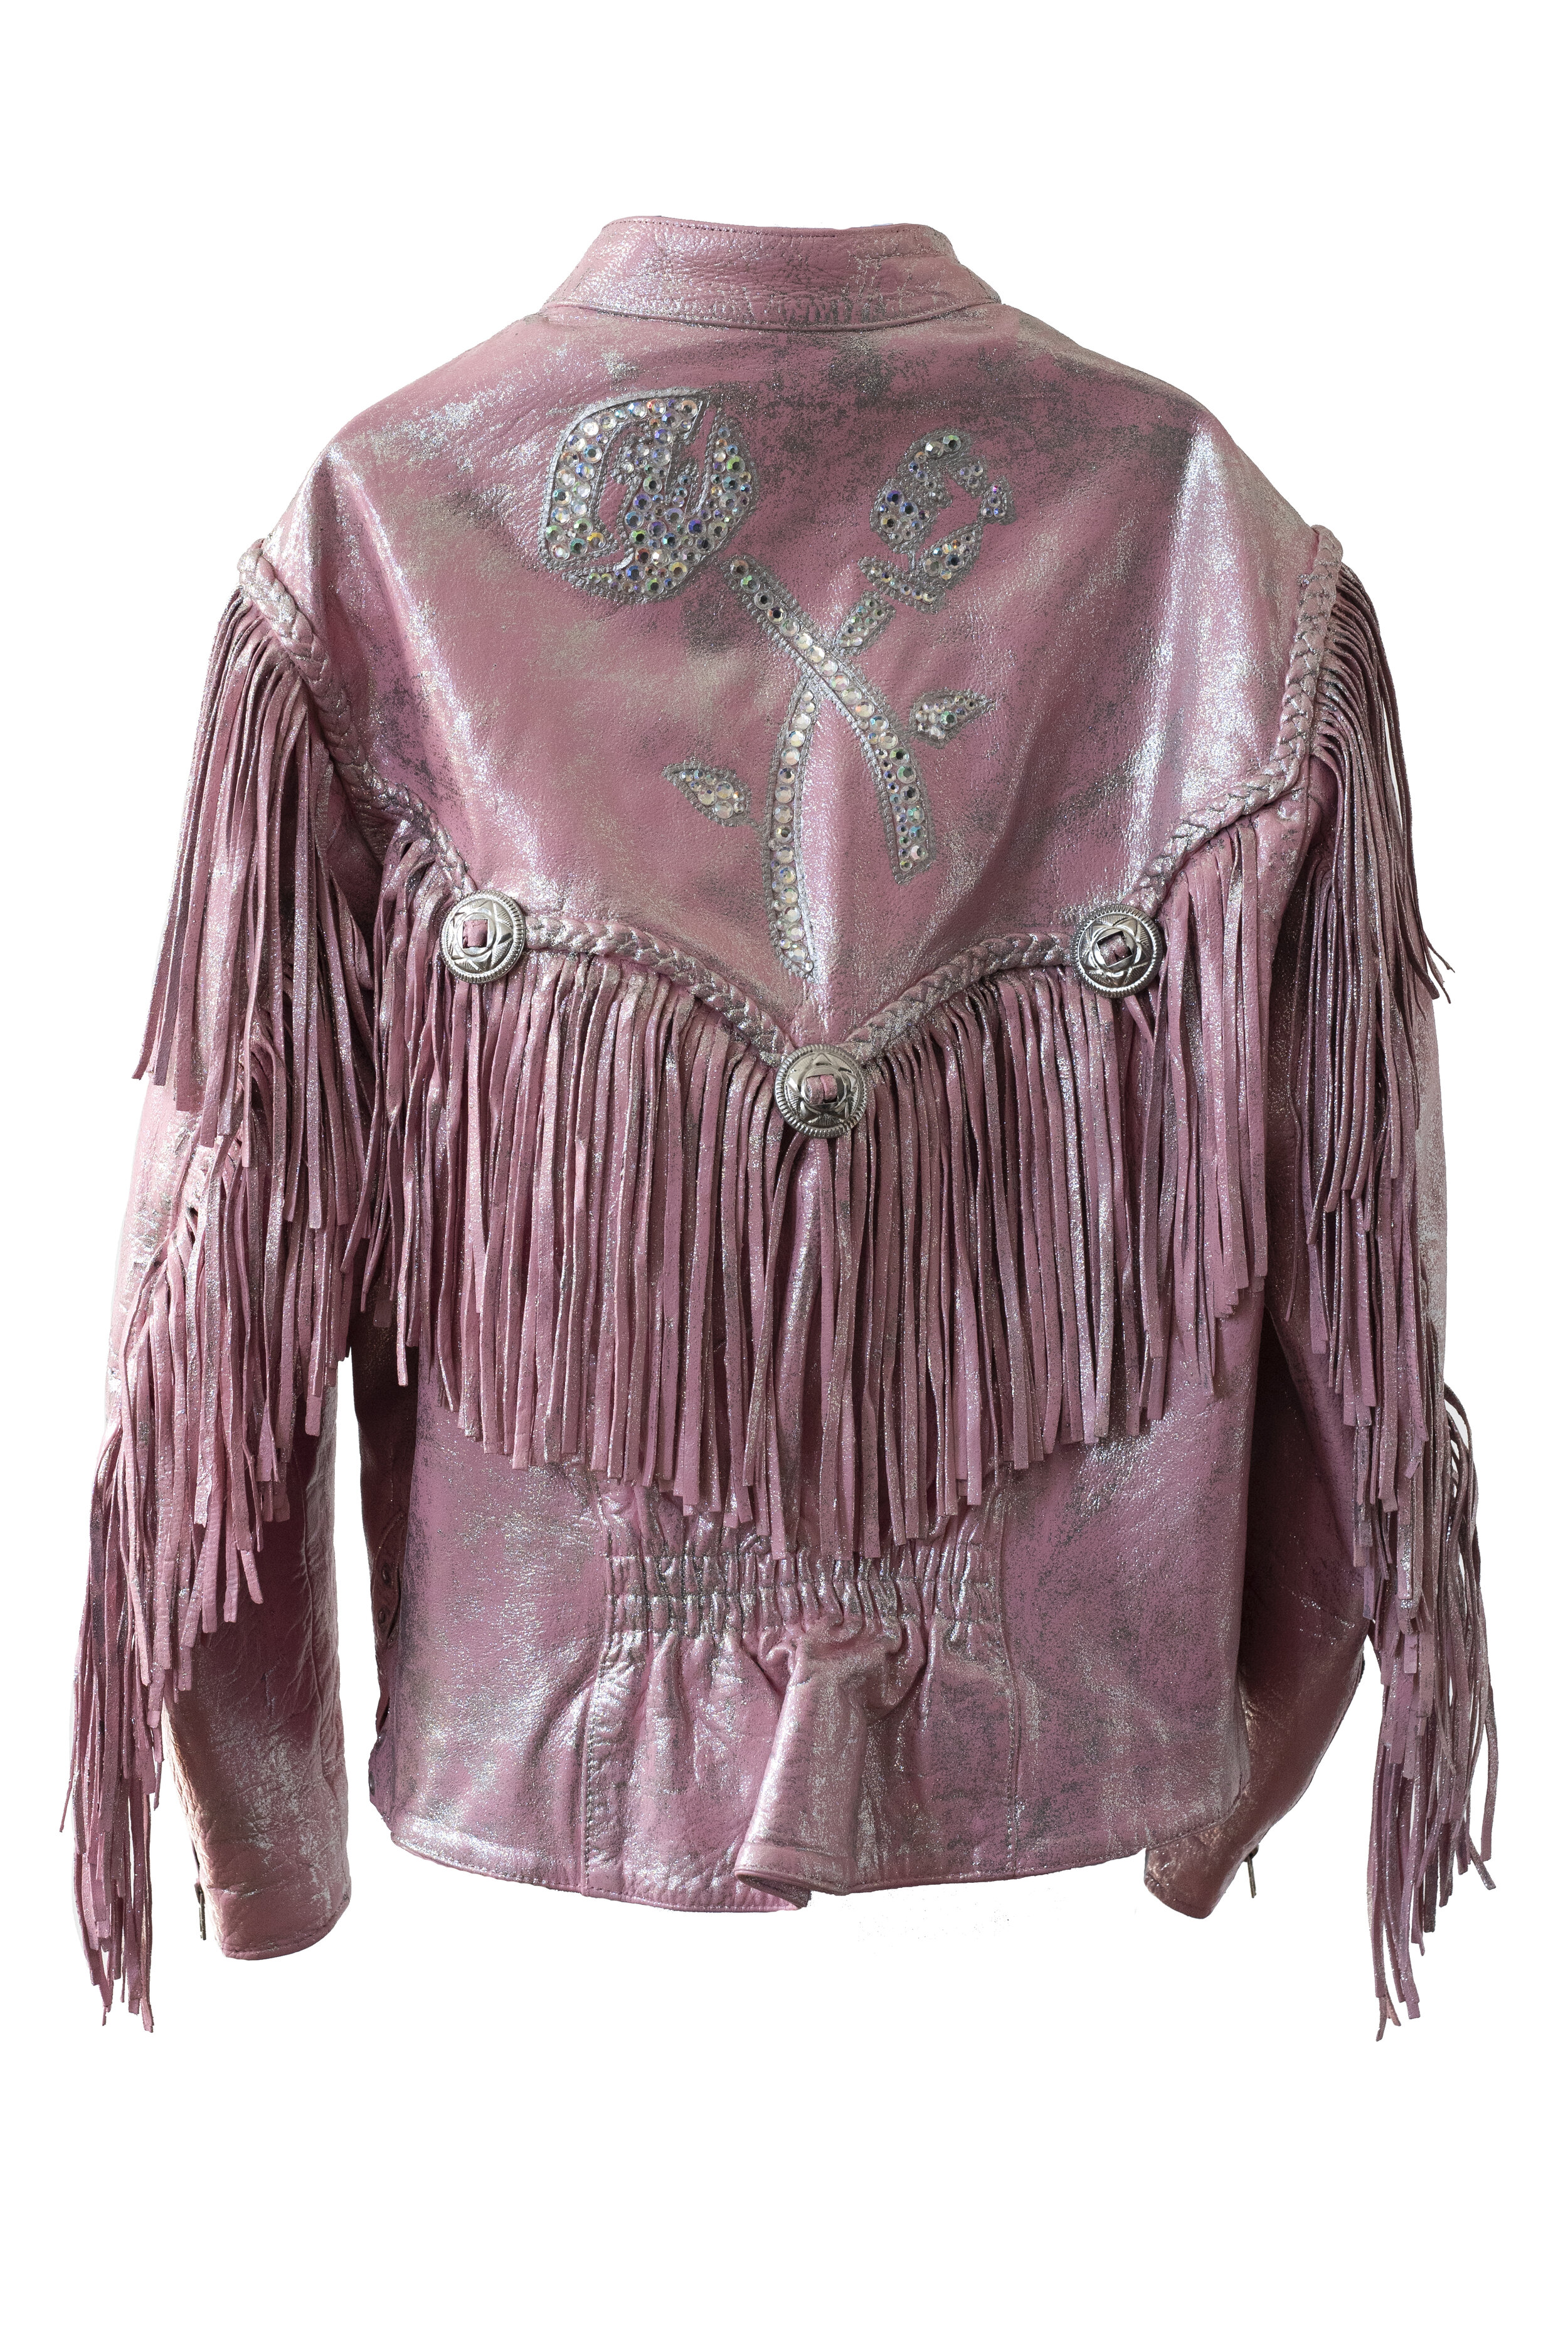 KELSEY RANDALL - shop all collections - ONE OF A KIND - BONAVEGA pink  glitter rhinestone fringe jacket